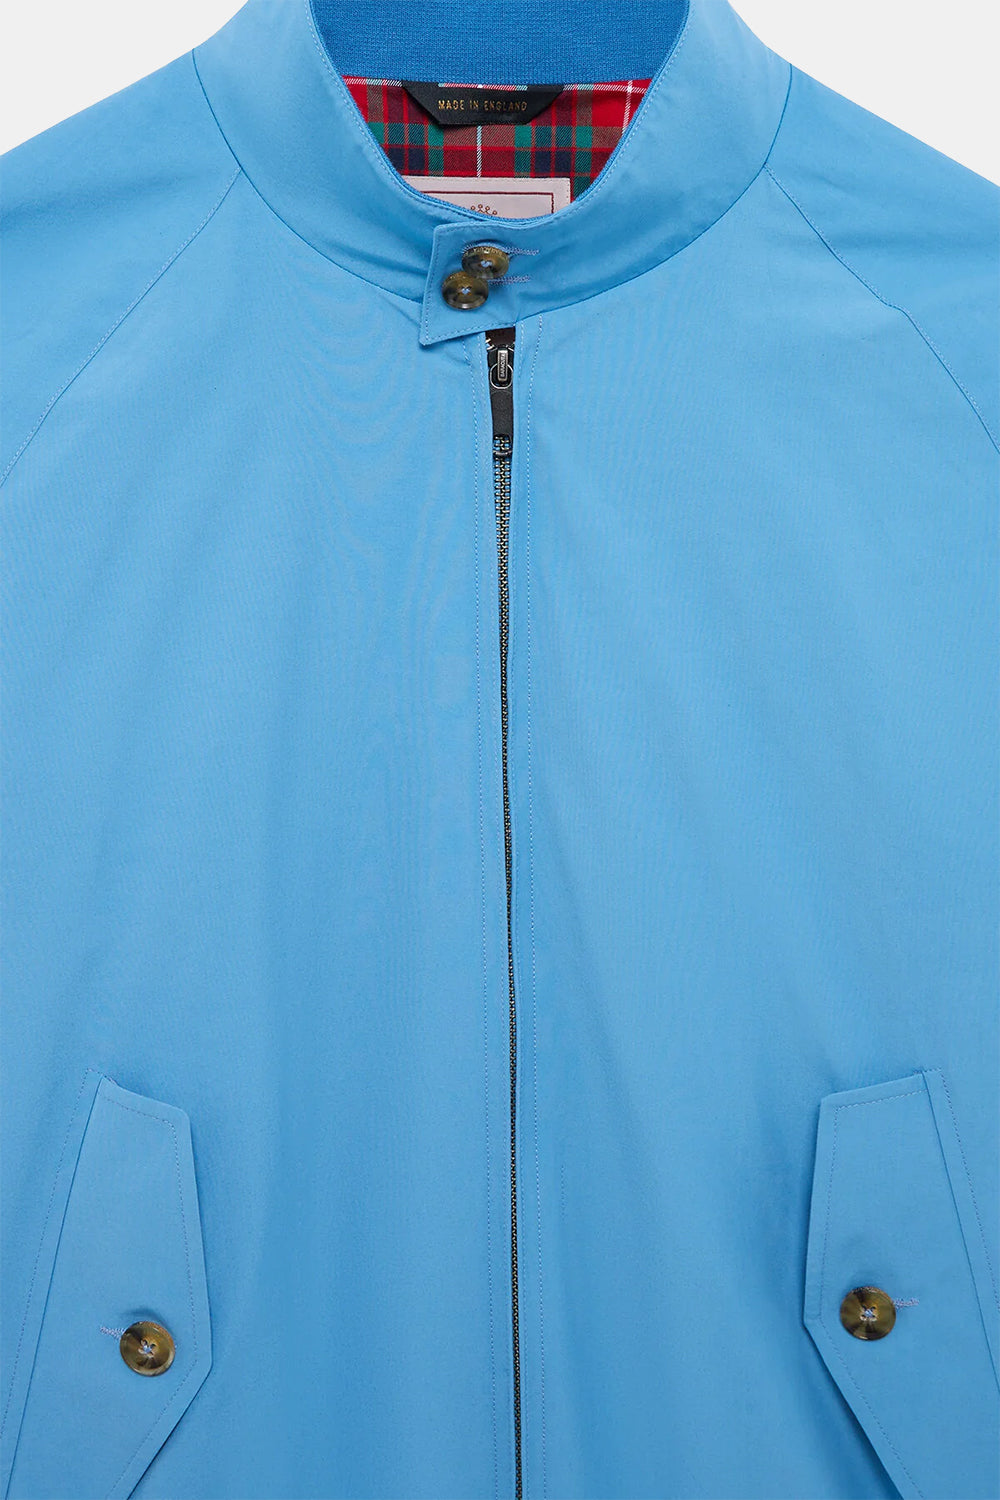 Baracuta G9 Classic Cotton-Blend Harrington Jacket (Heritage Blue)
